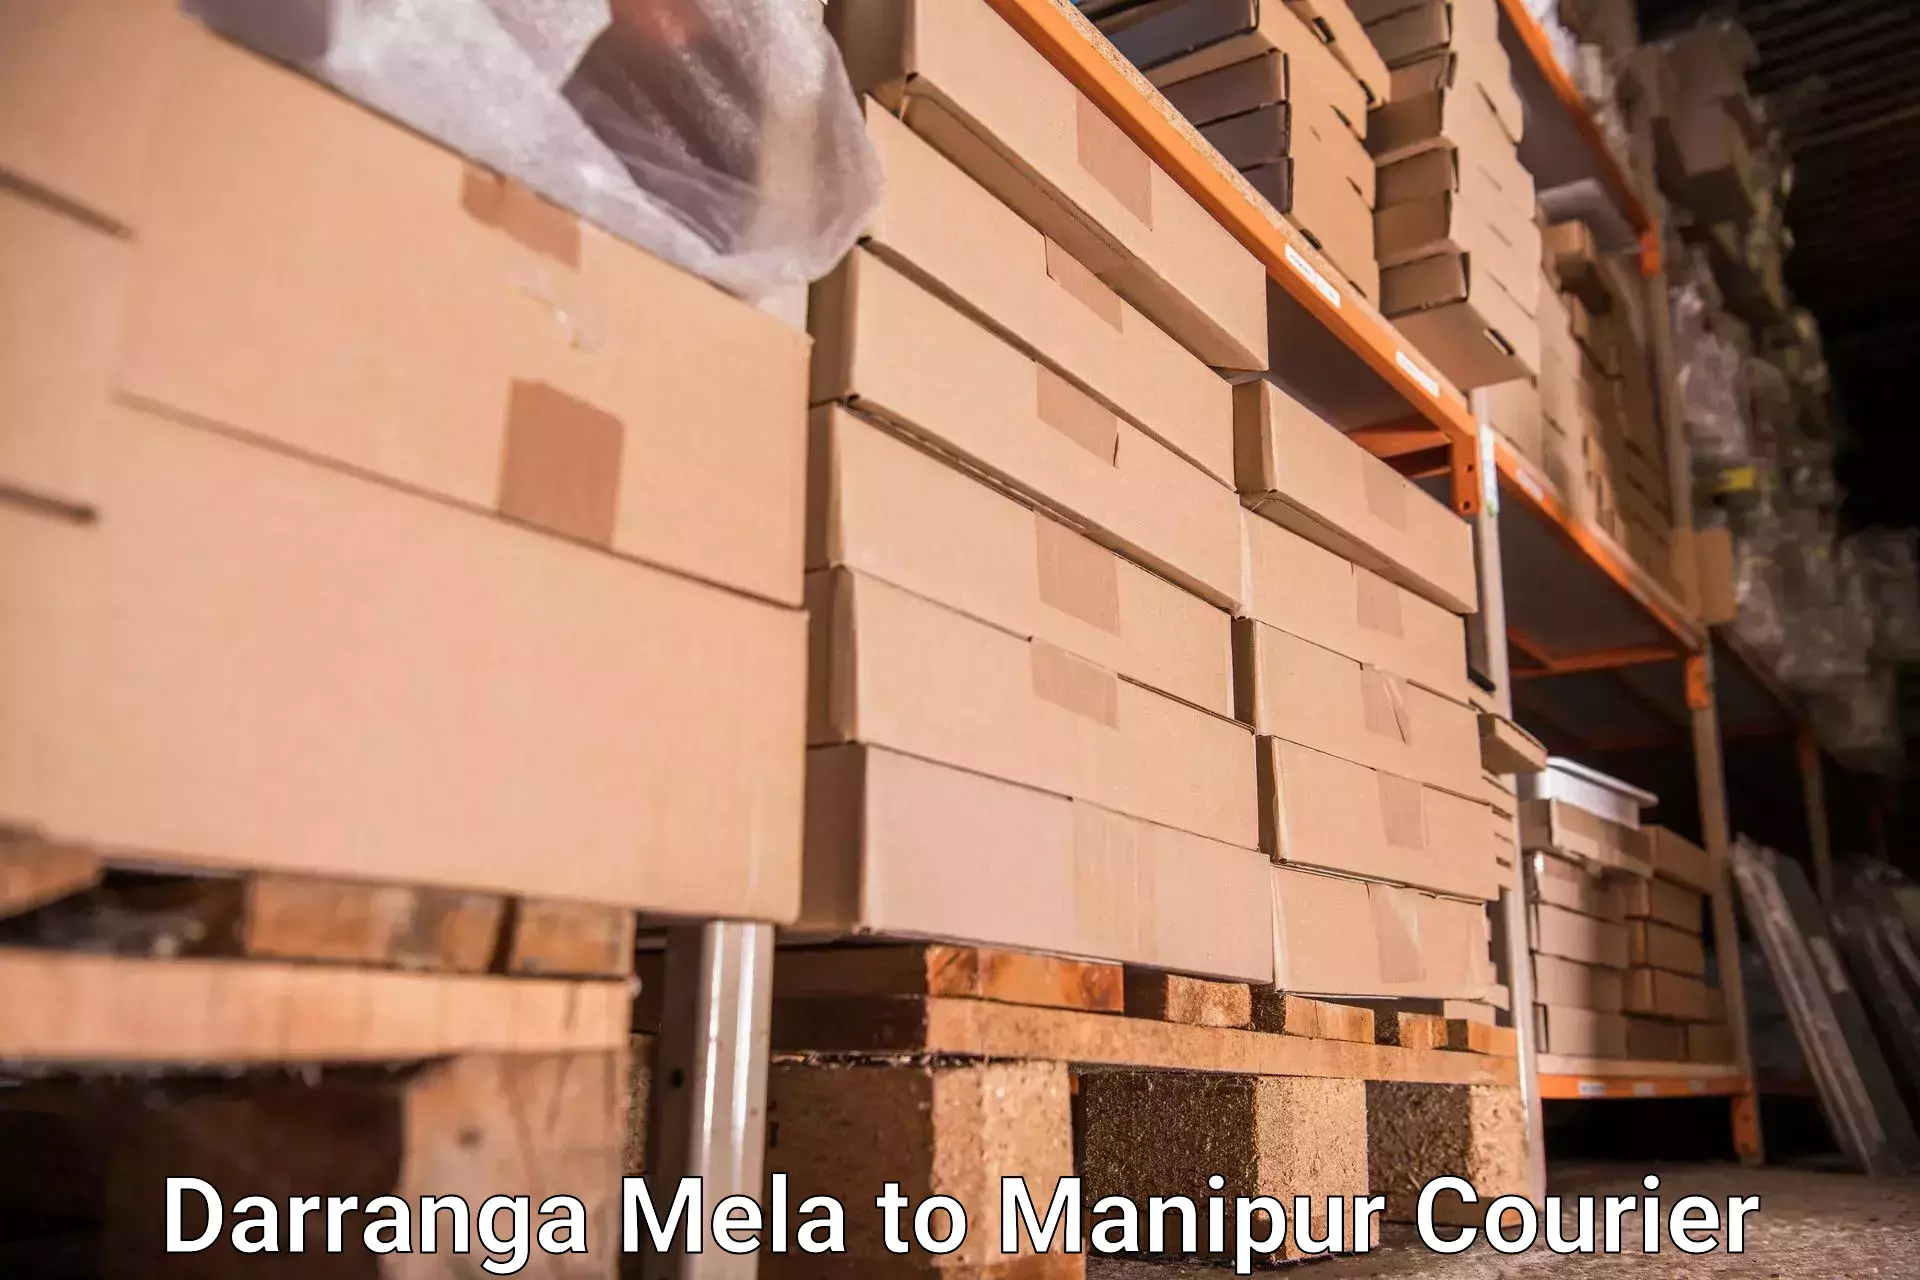 Baggage transport cost Darranga Mela to Manipur